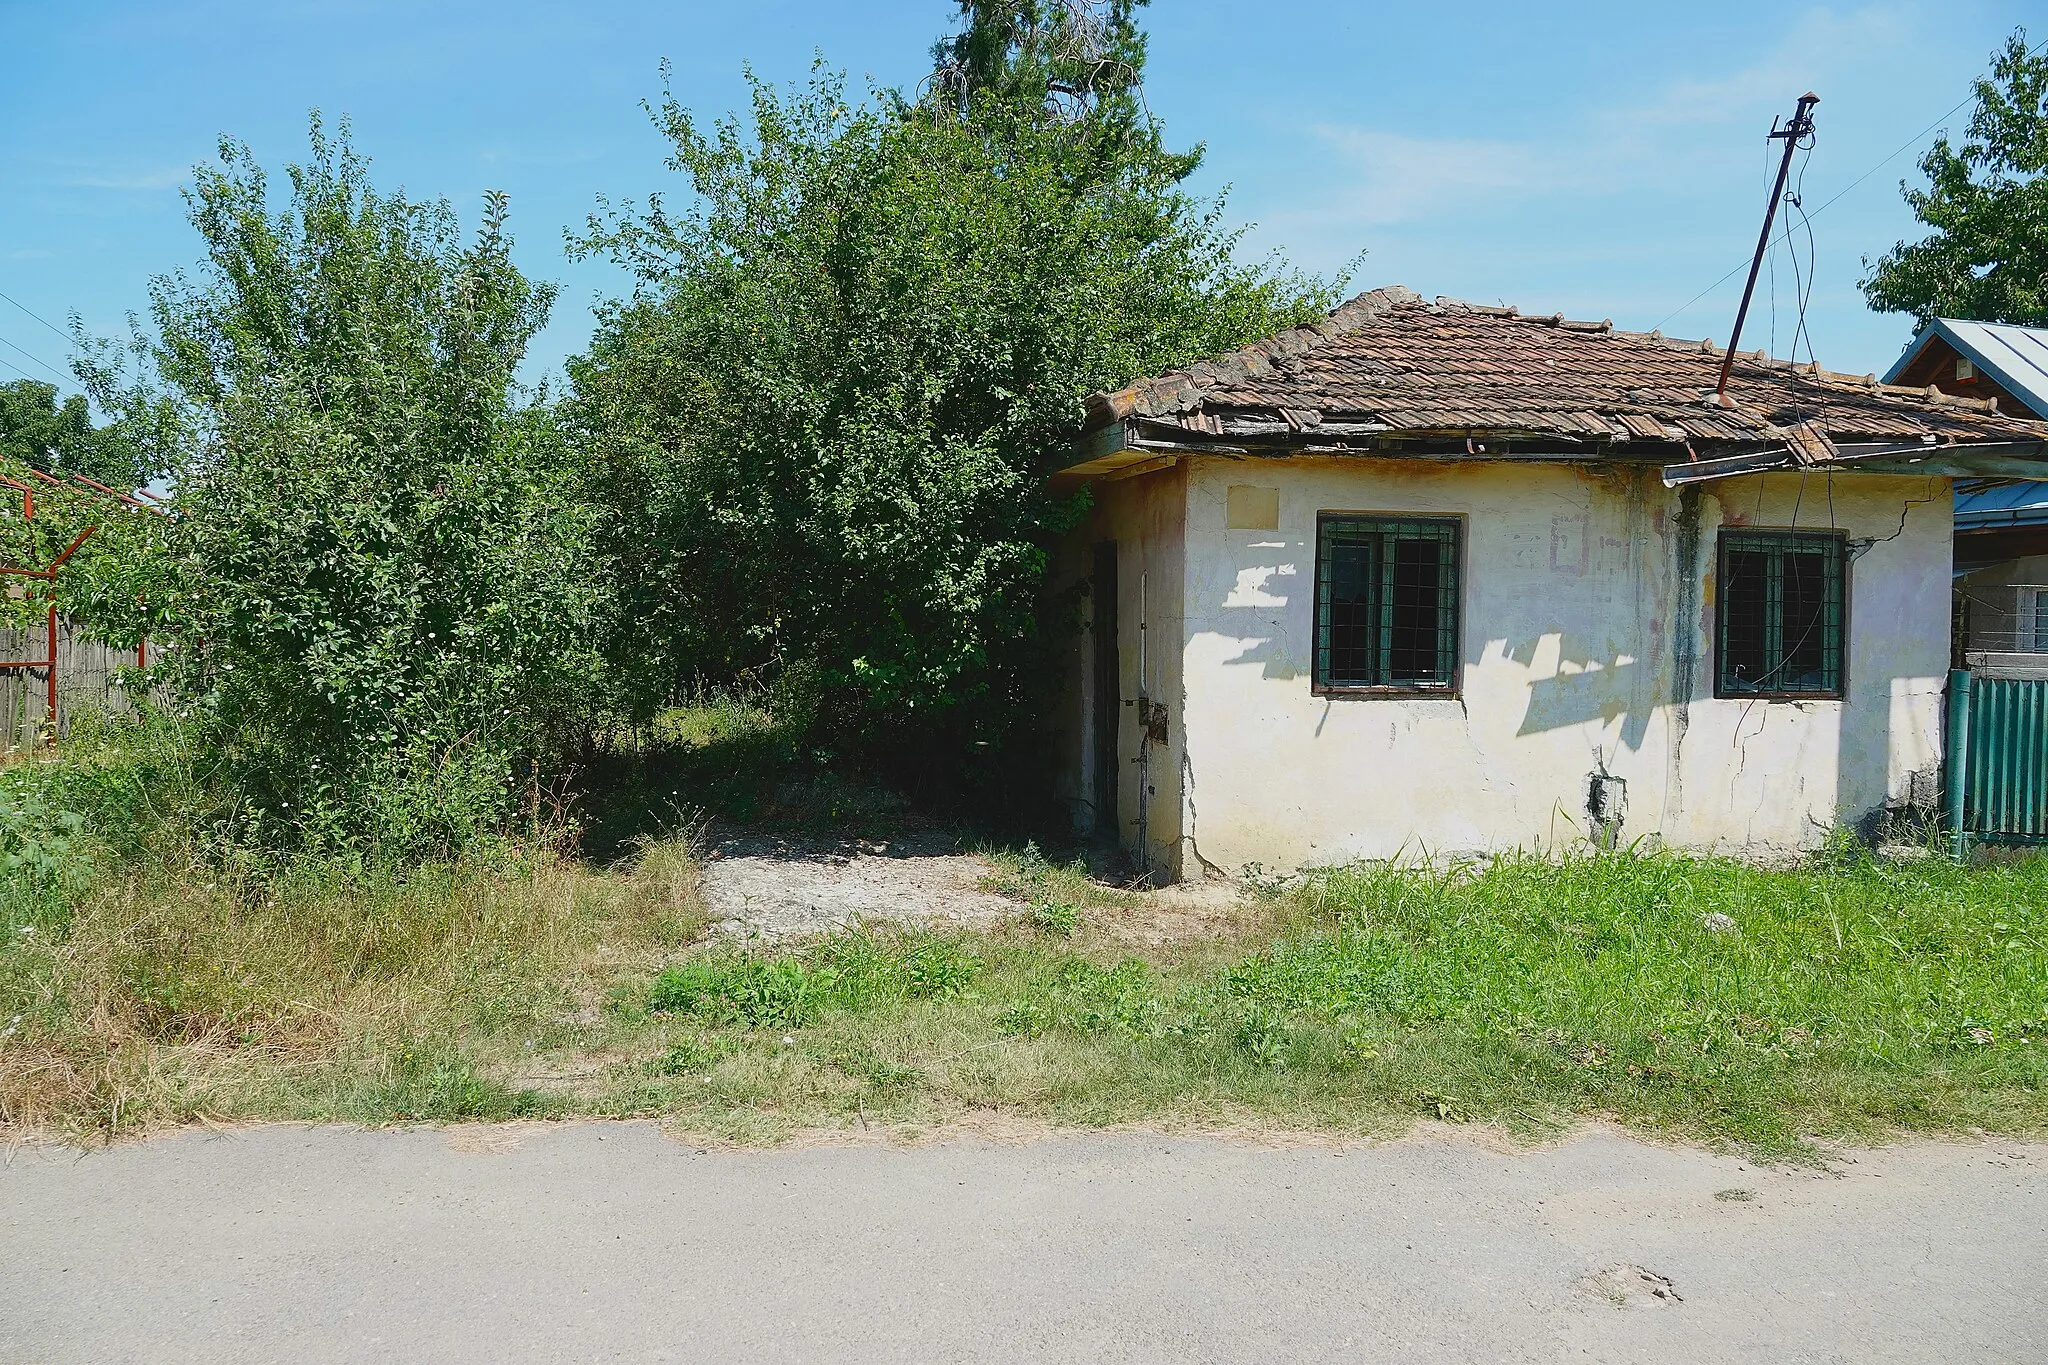 Photo showing: The former Dițești railway station in Prahova county, Romania.